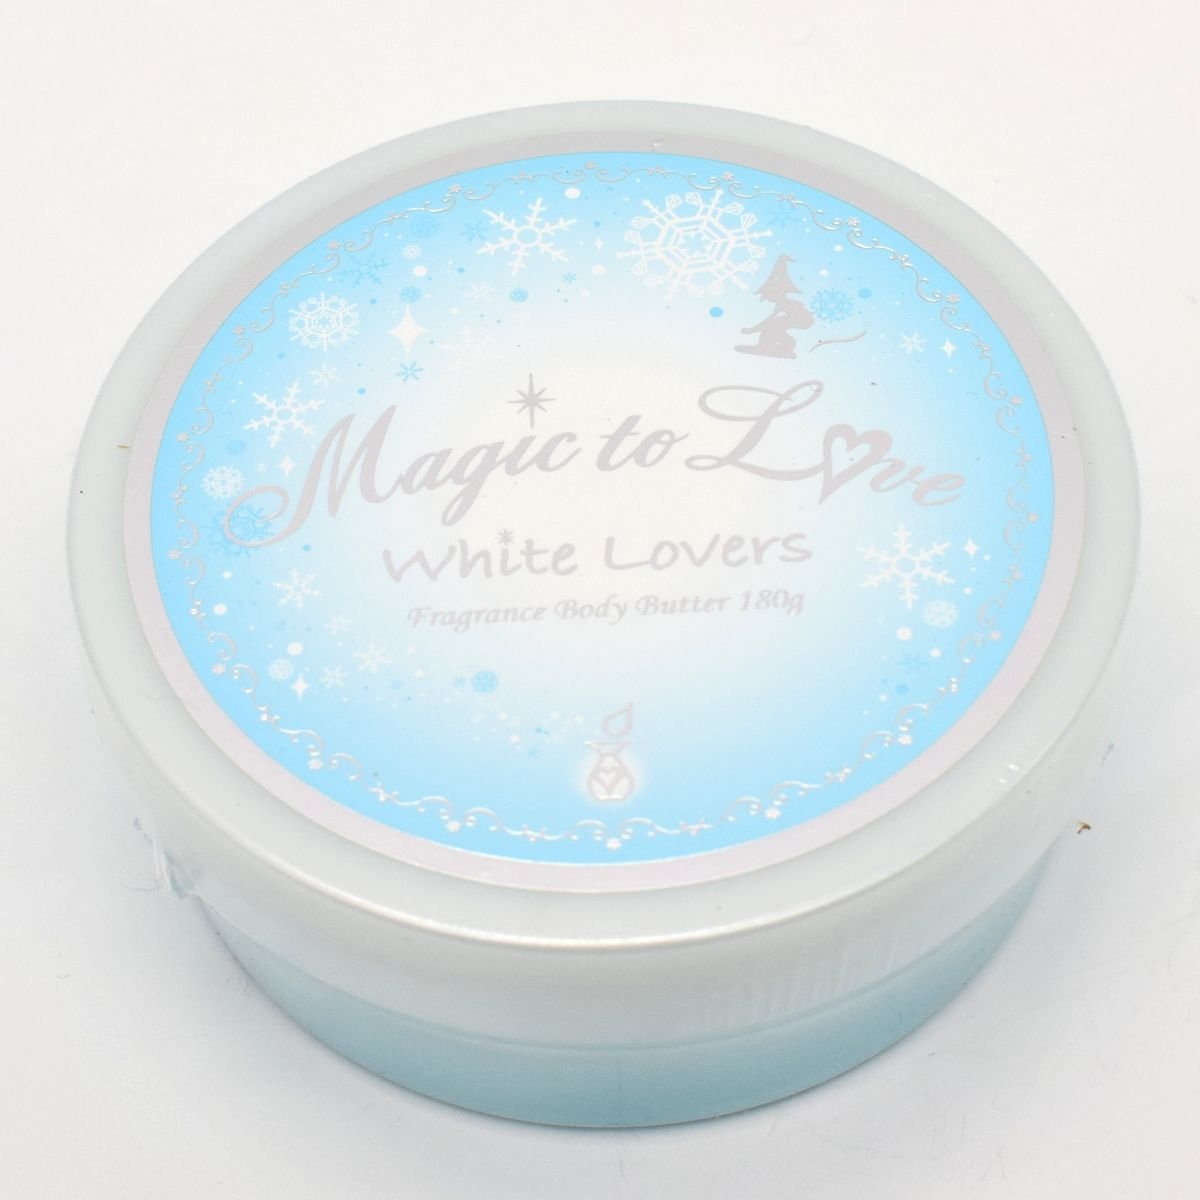 [ unused ] Rav & piece Magic tu Rav white Raver zo-do Pal fam body butter body powder limitation coffret [S207302]